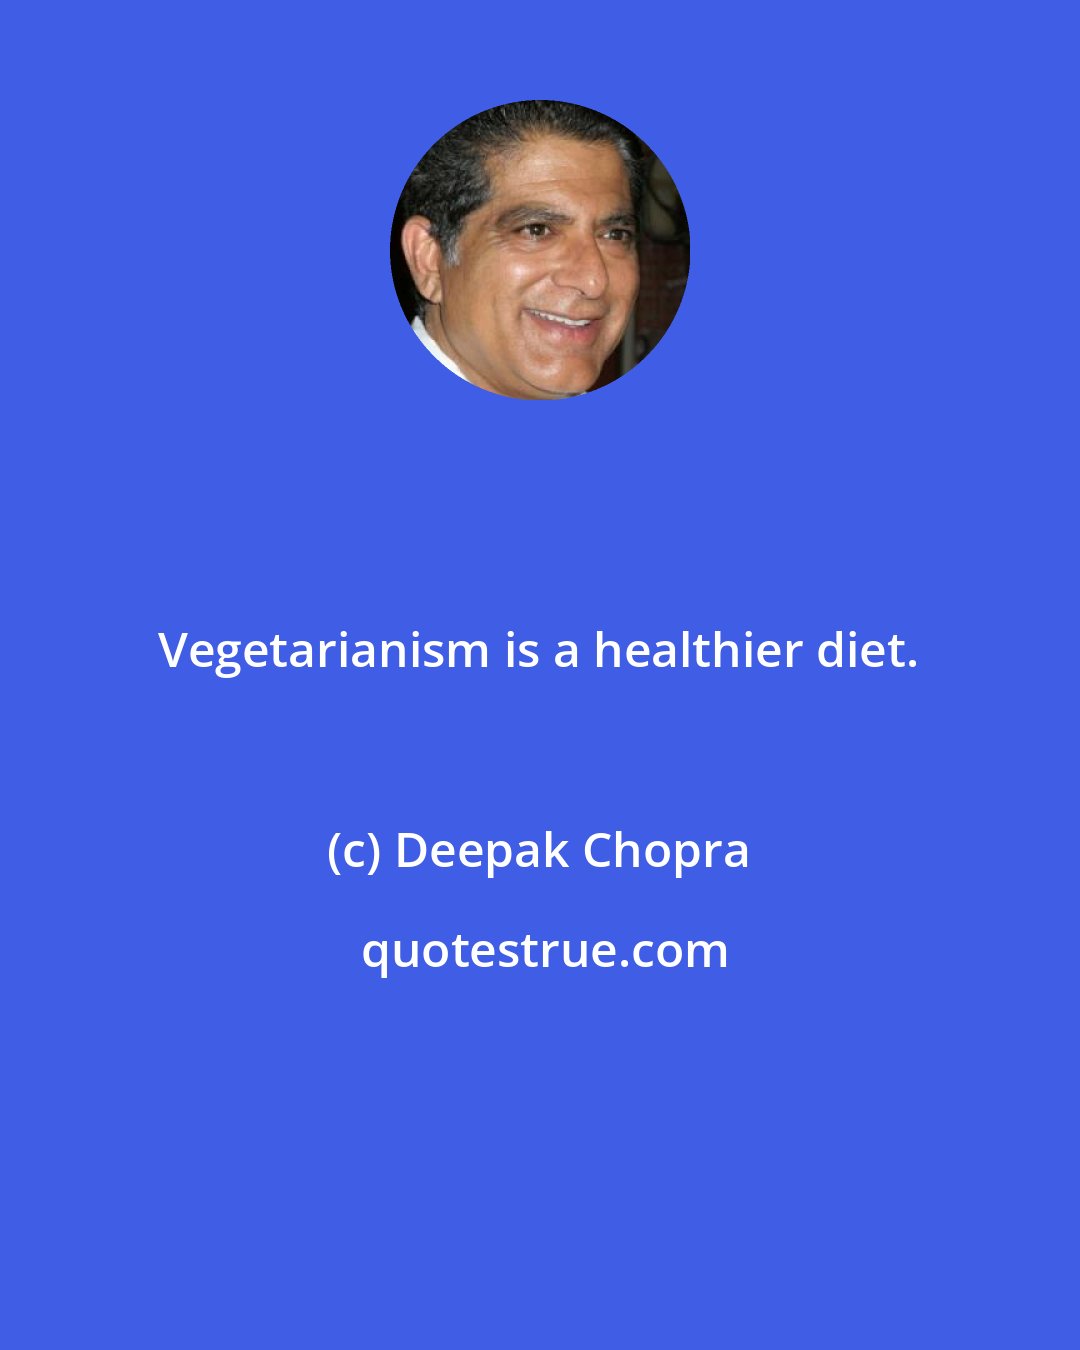 Deepak Chopra: Vegetarianism is a healthier diet.